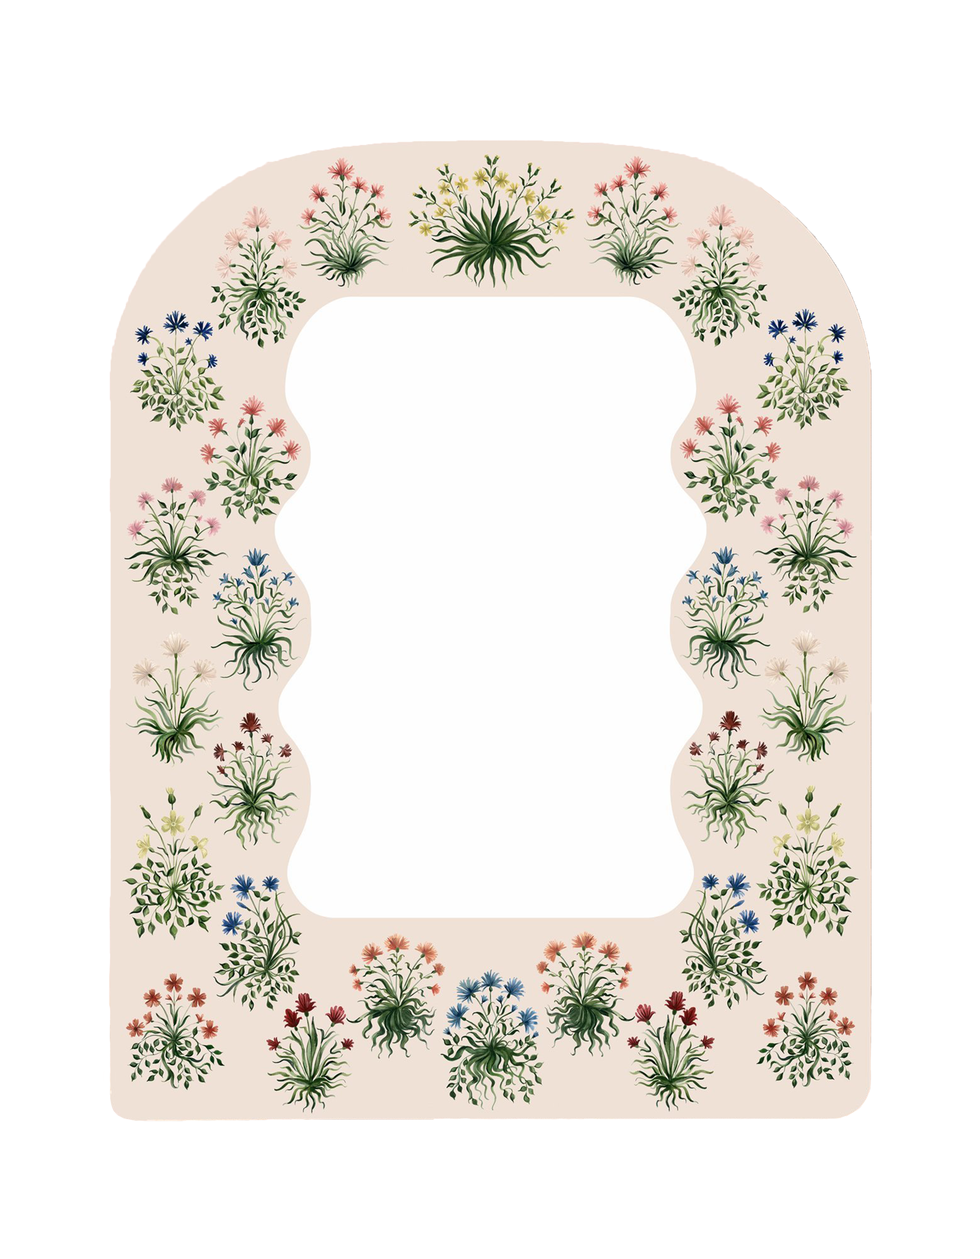 riley sheehey x fleur home floral mirrors